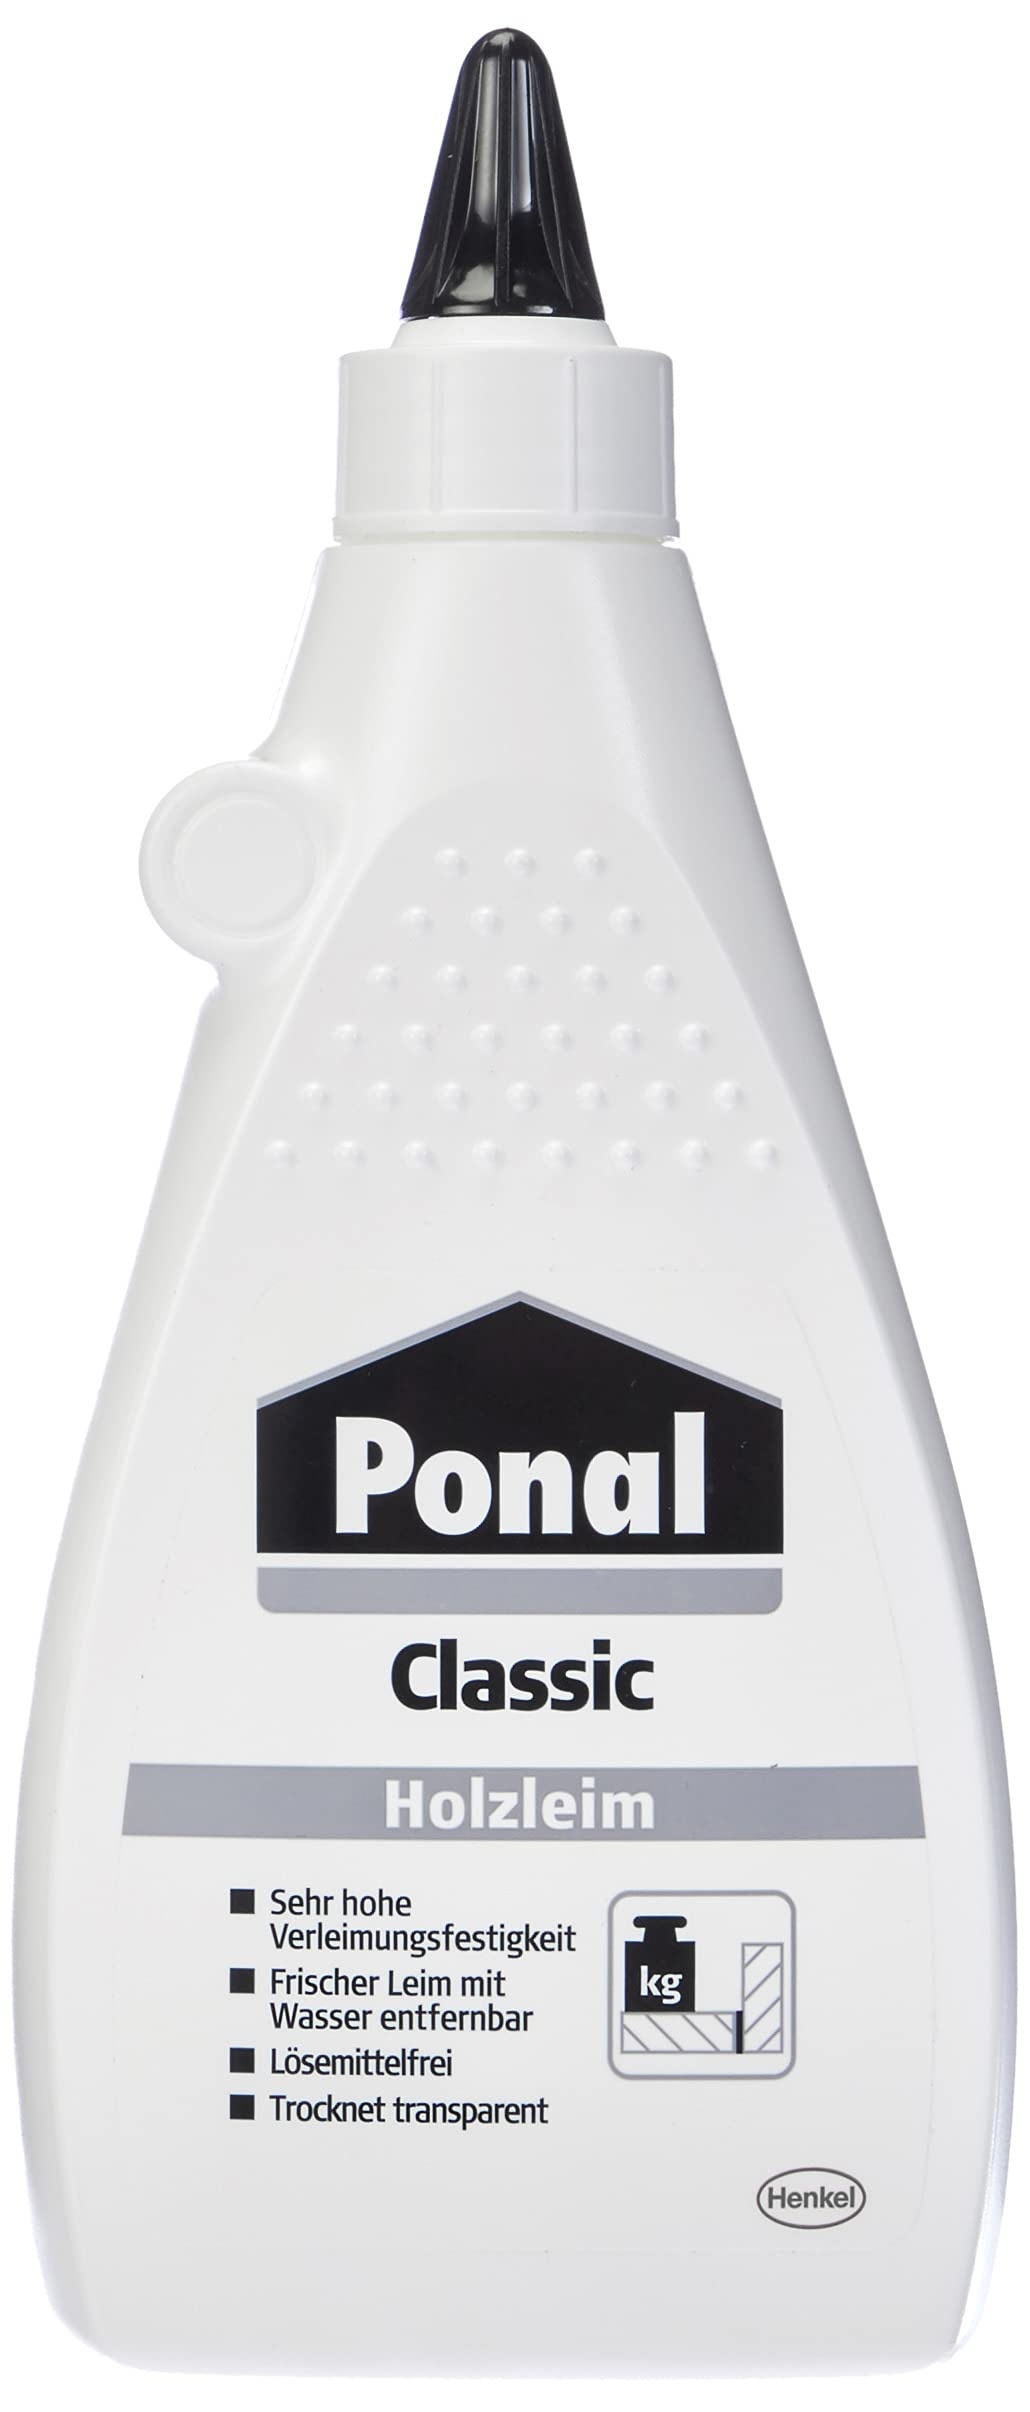 ponal classic 550 g